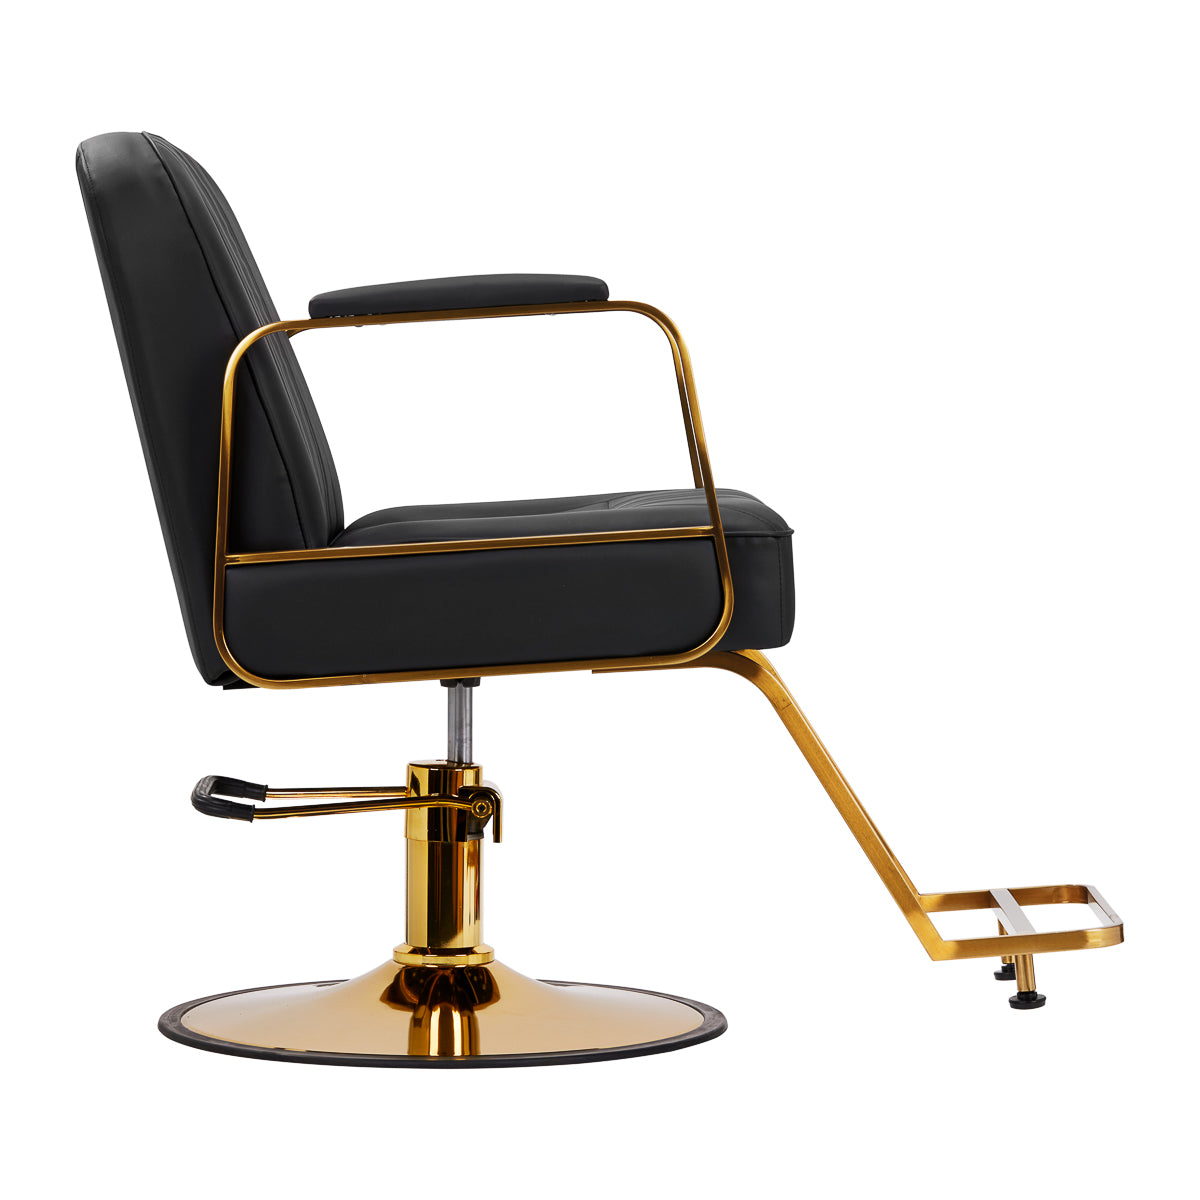 Gabbiano Hairdressing Chair Acri Gold & Black